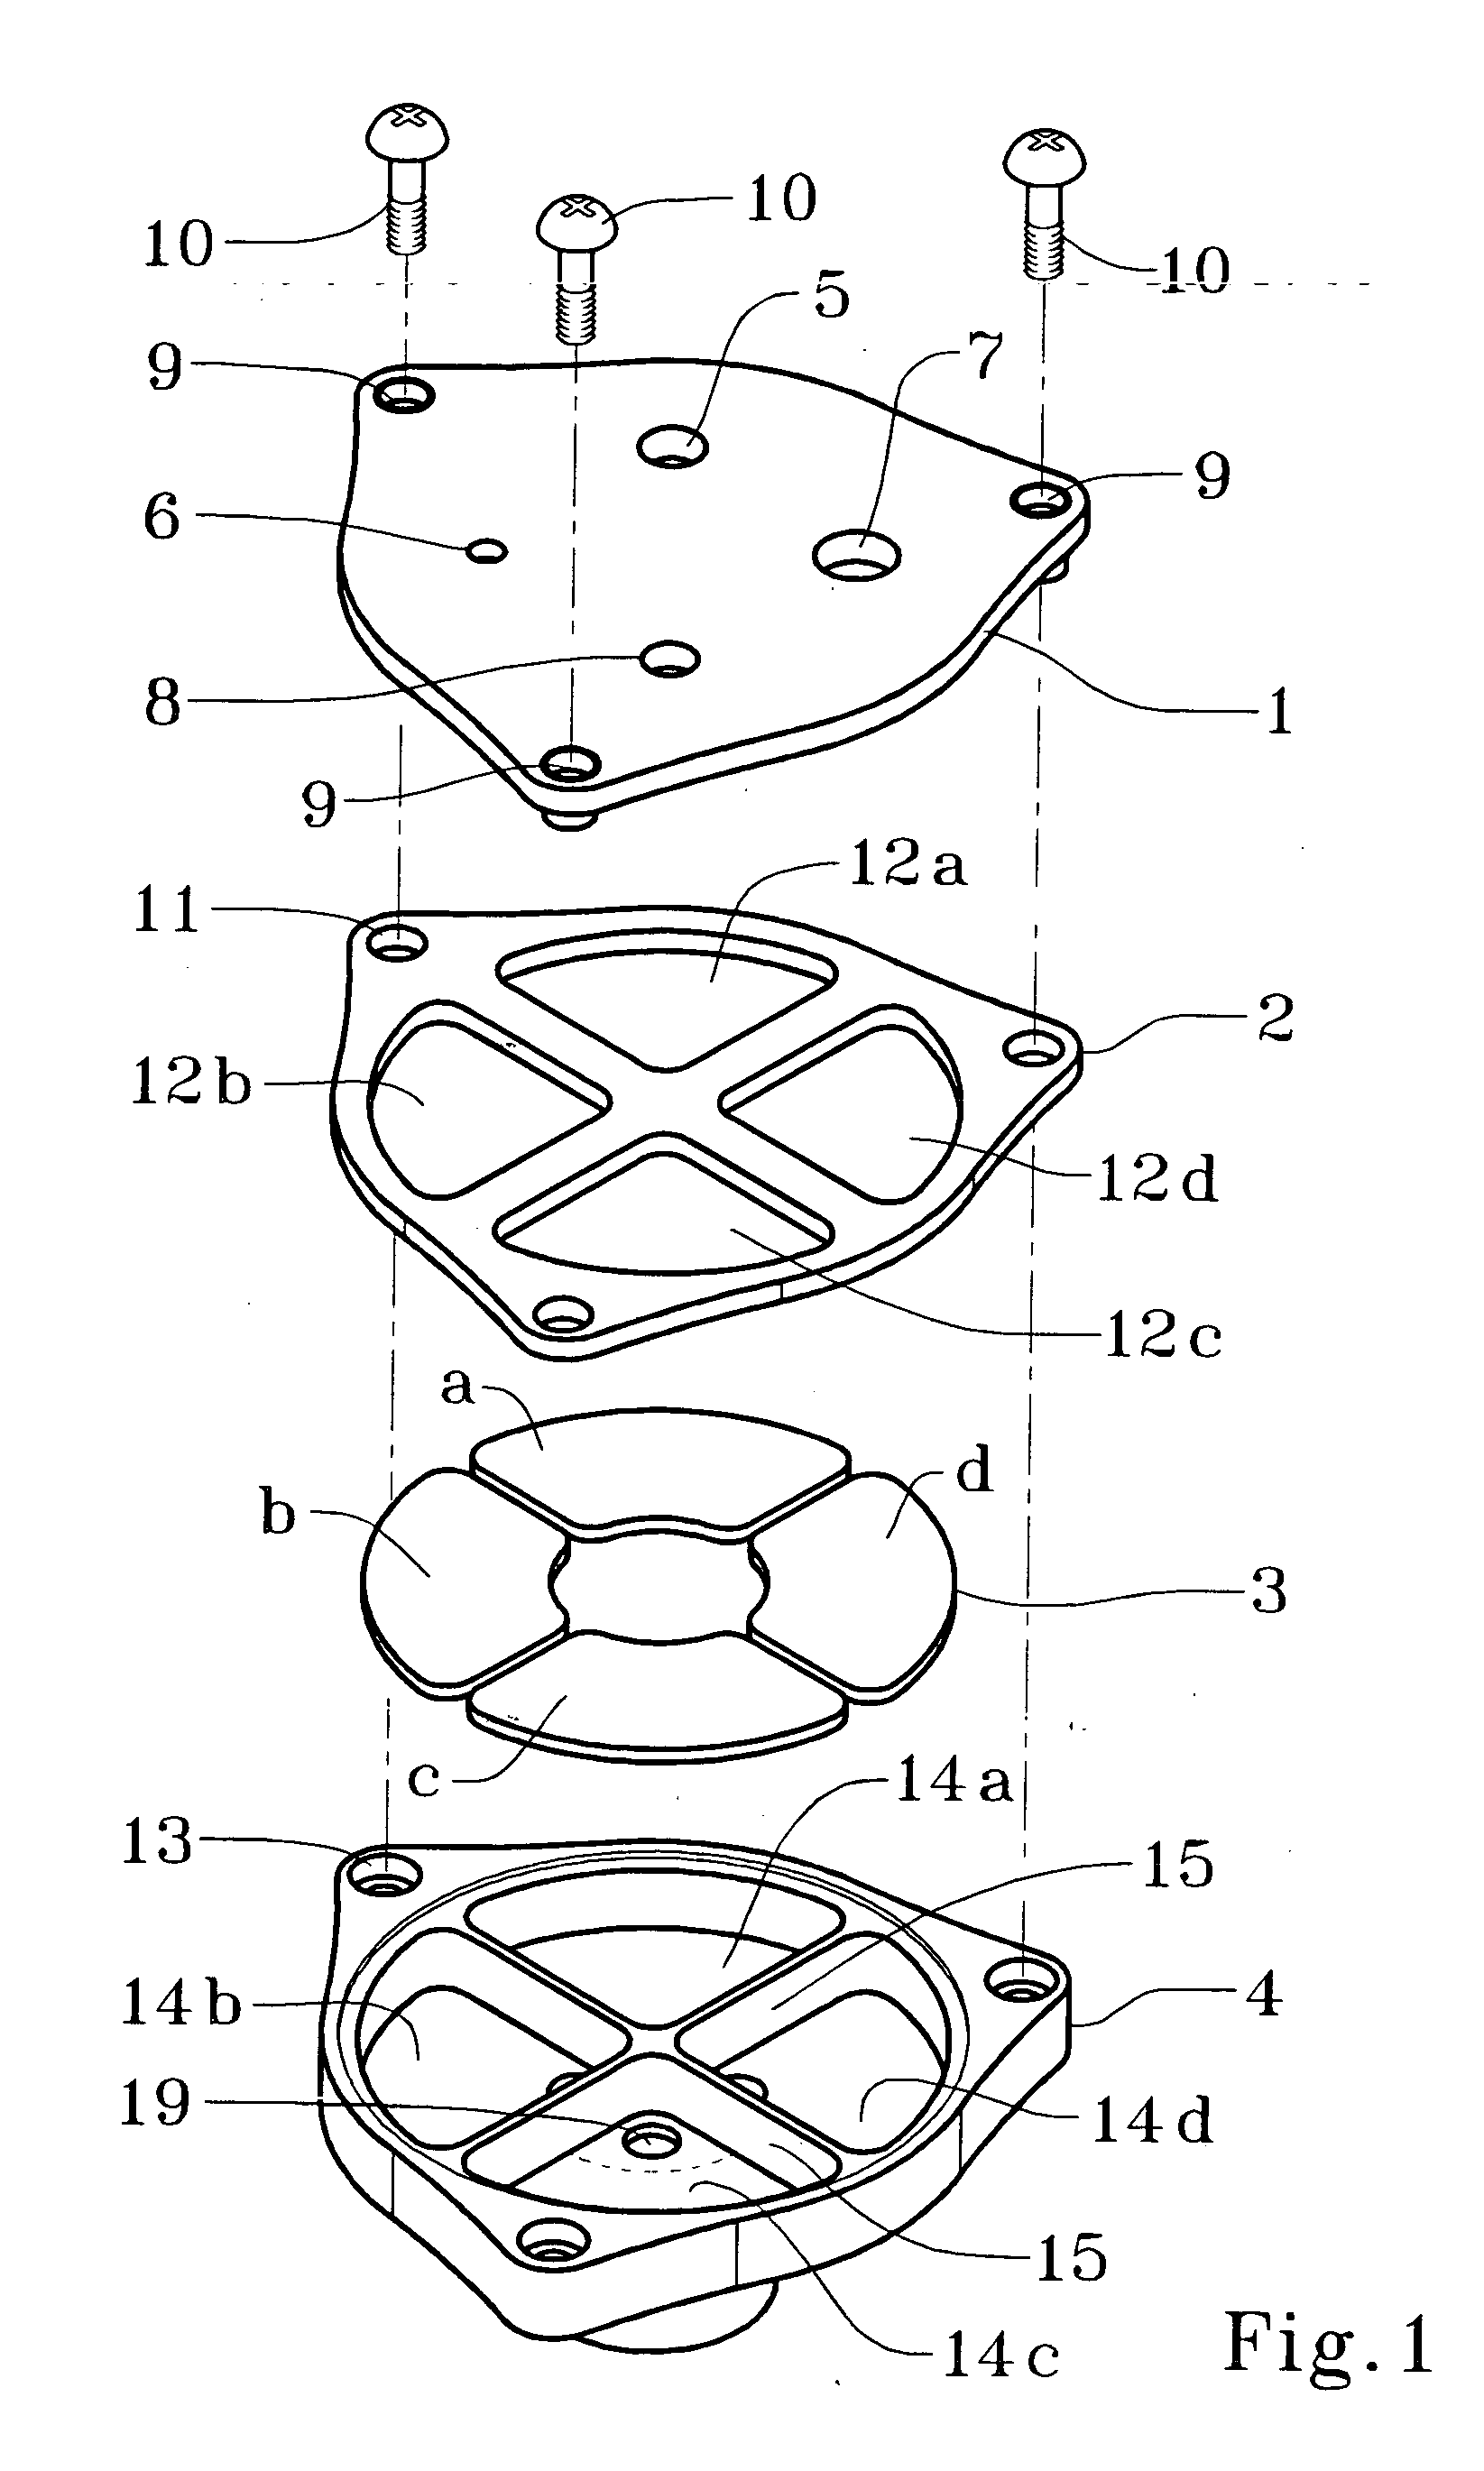 Air sampler with parallel impactors